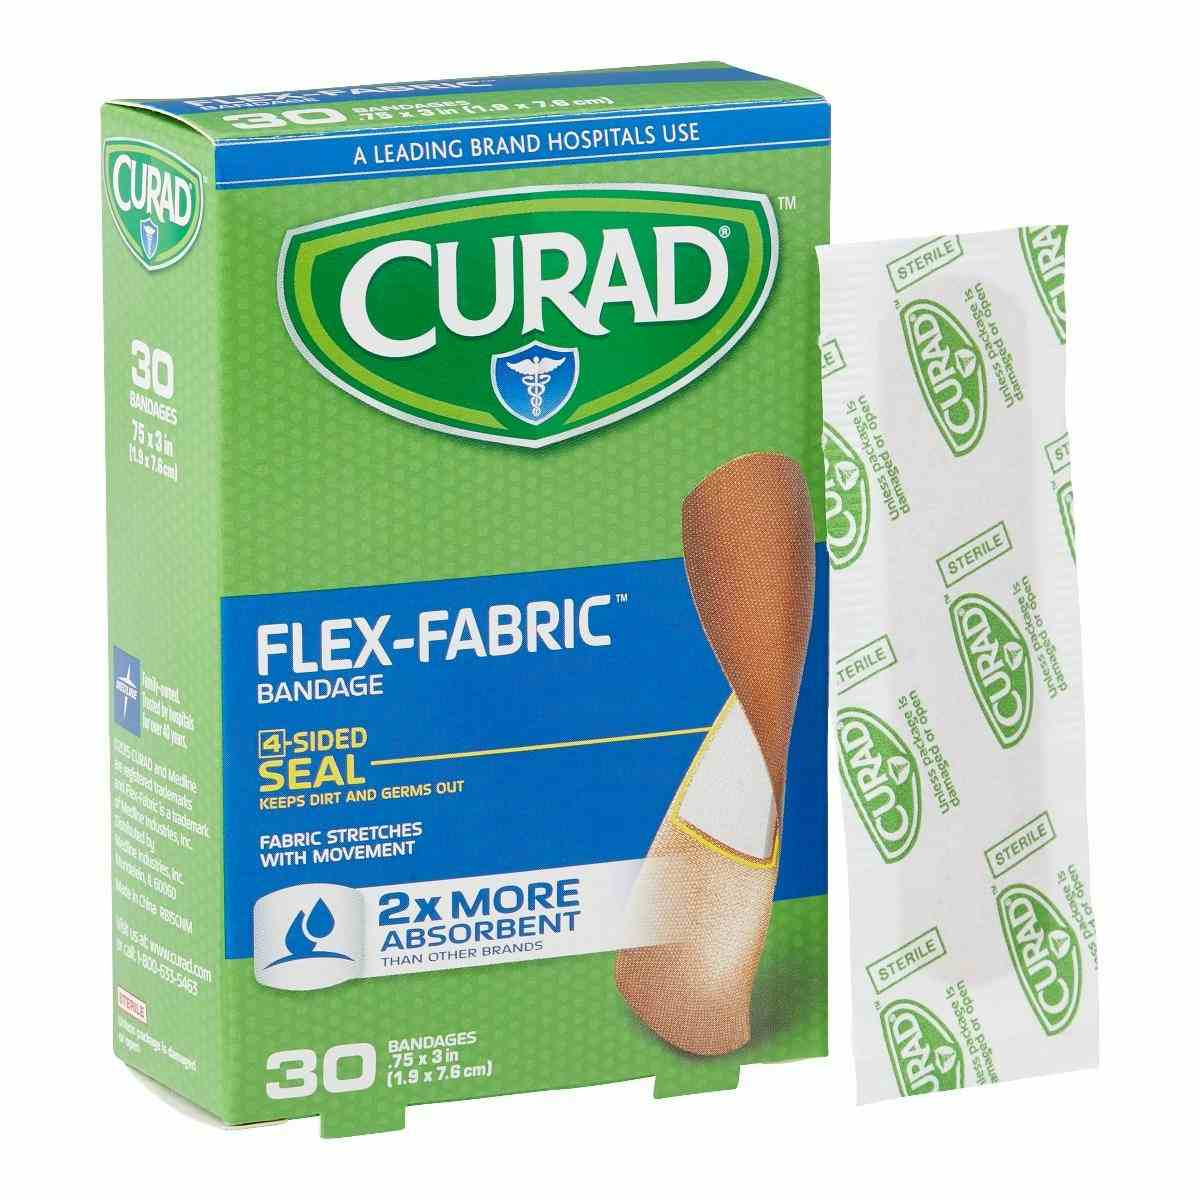 Curad Flex-Fabric Bandages, 3/4" X 3", CUR47315RRB, 3/4" X 3" - Case of 24